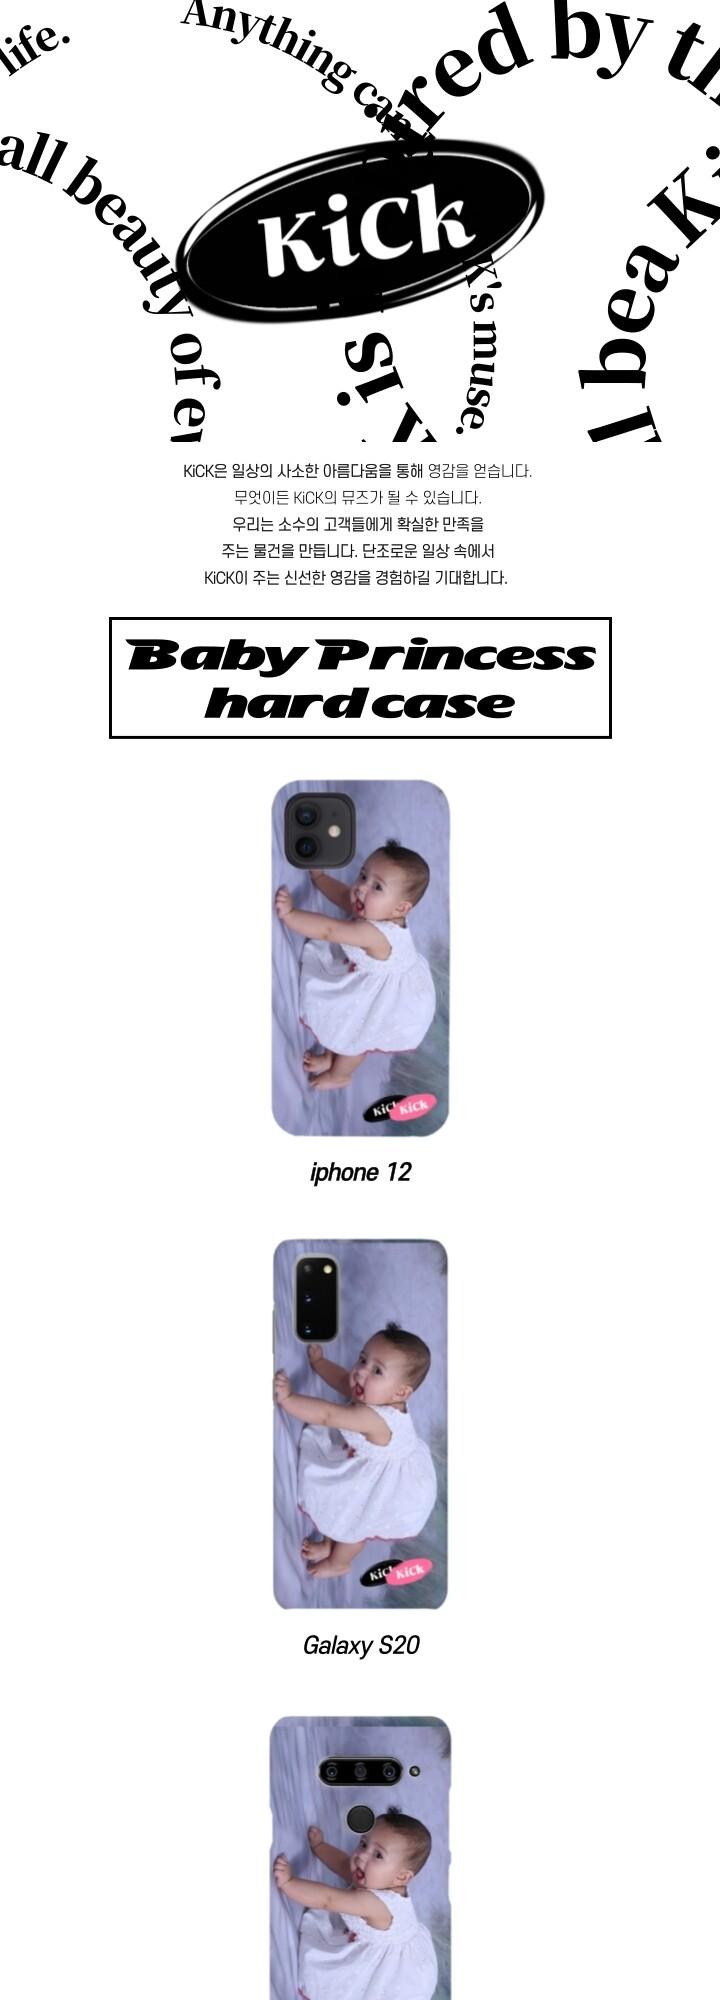 Baby Princess Hard Case